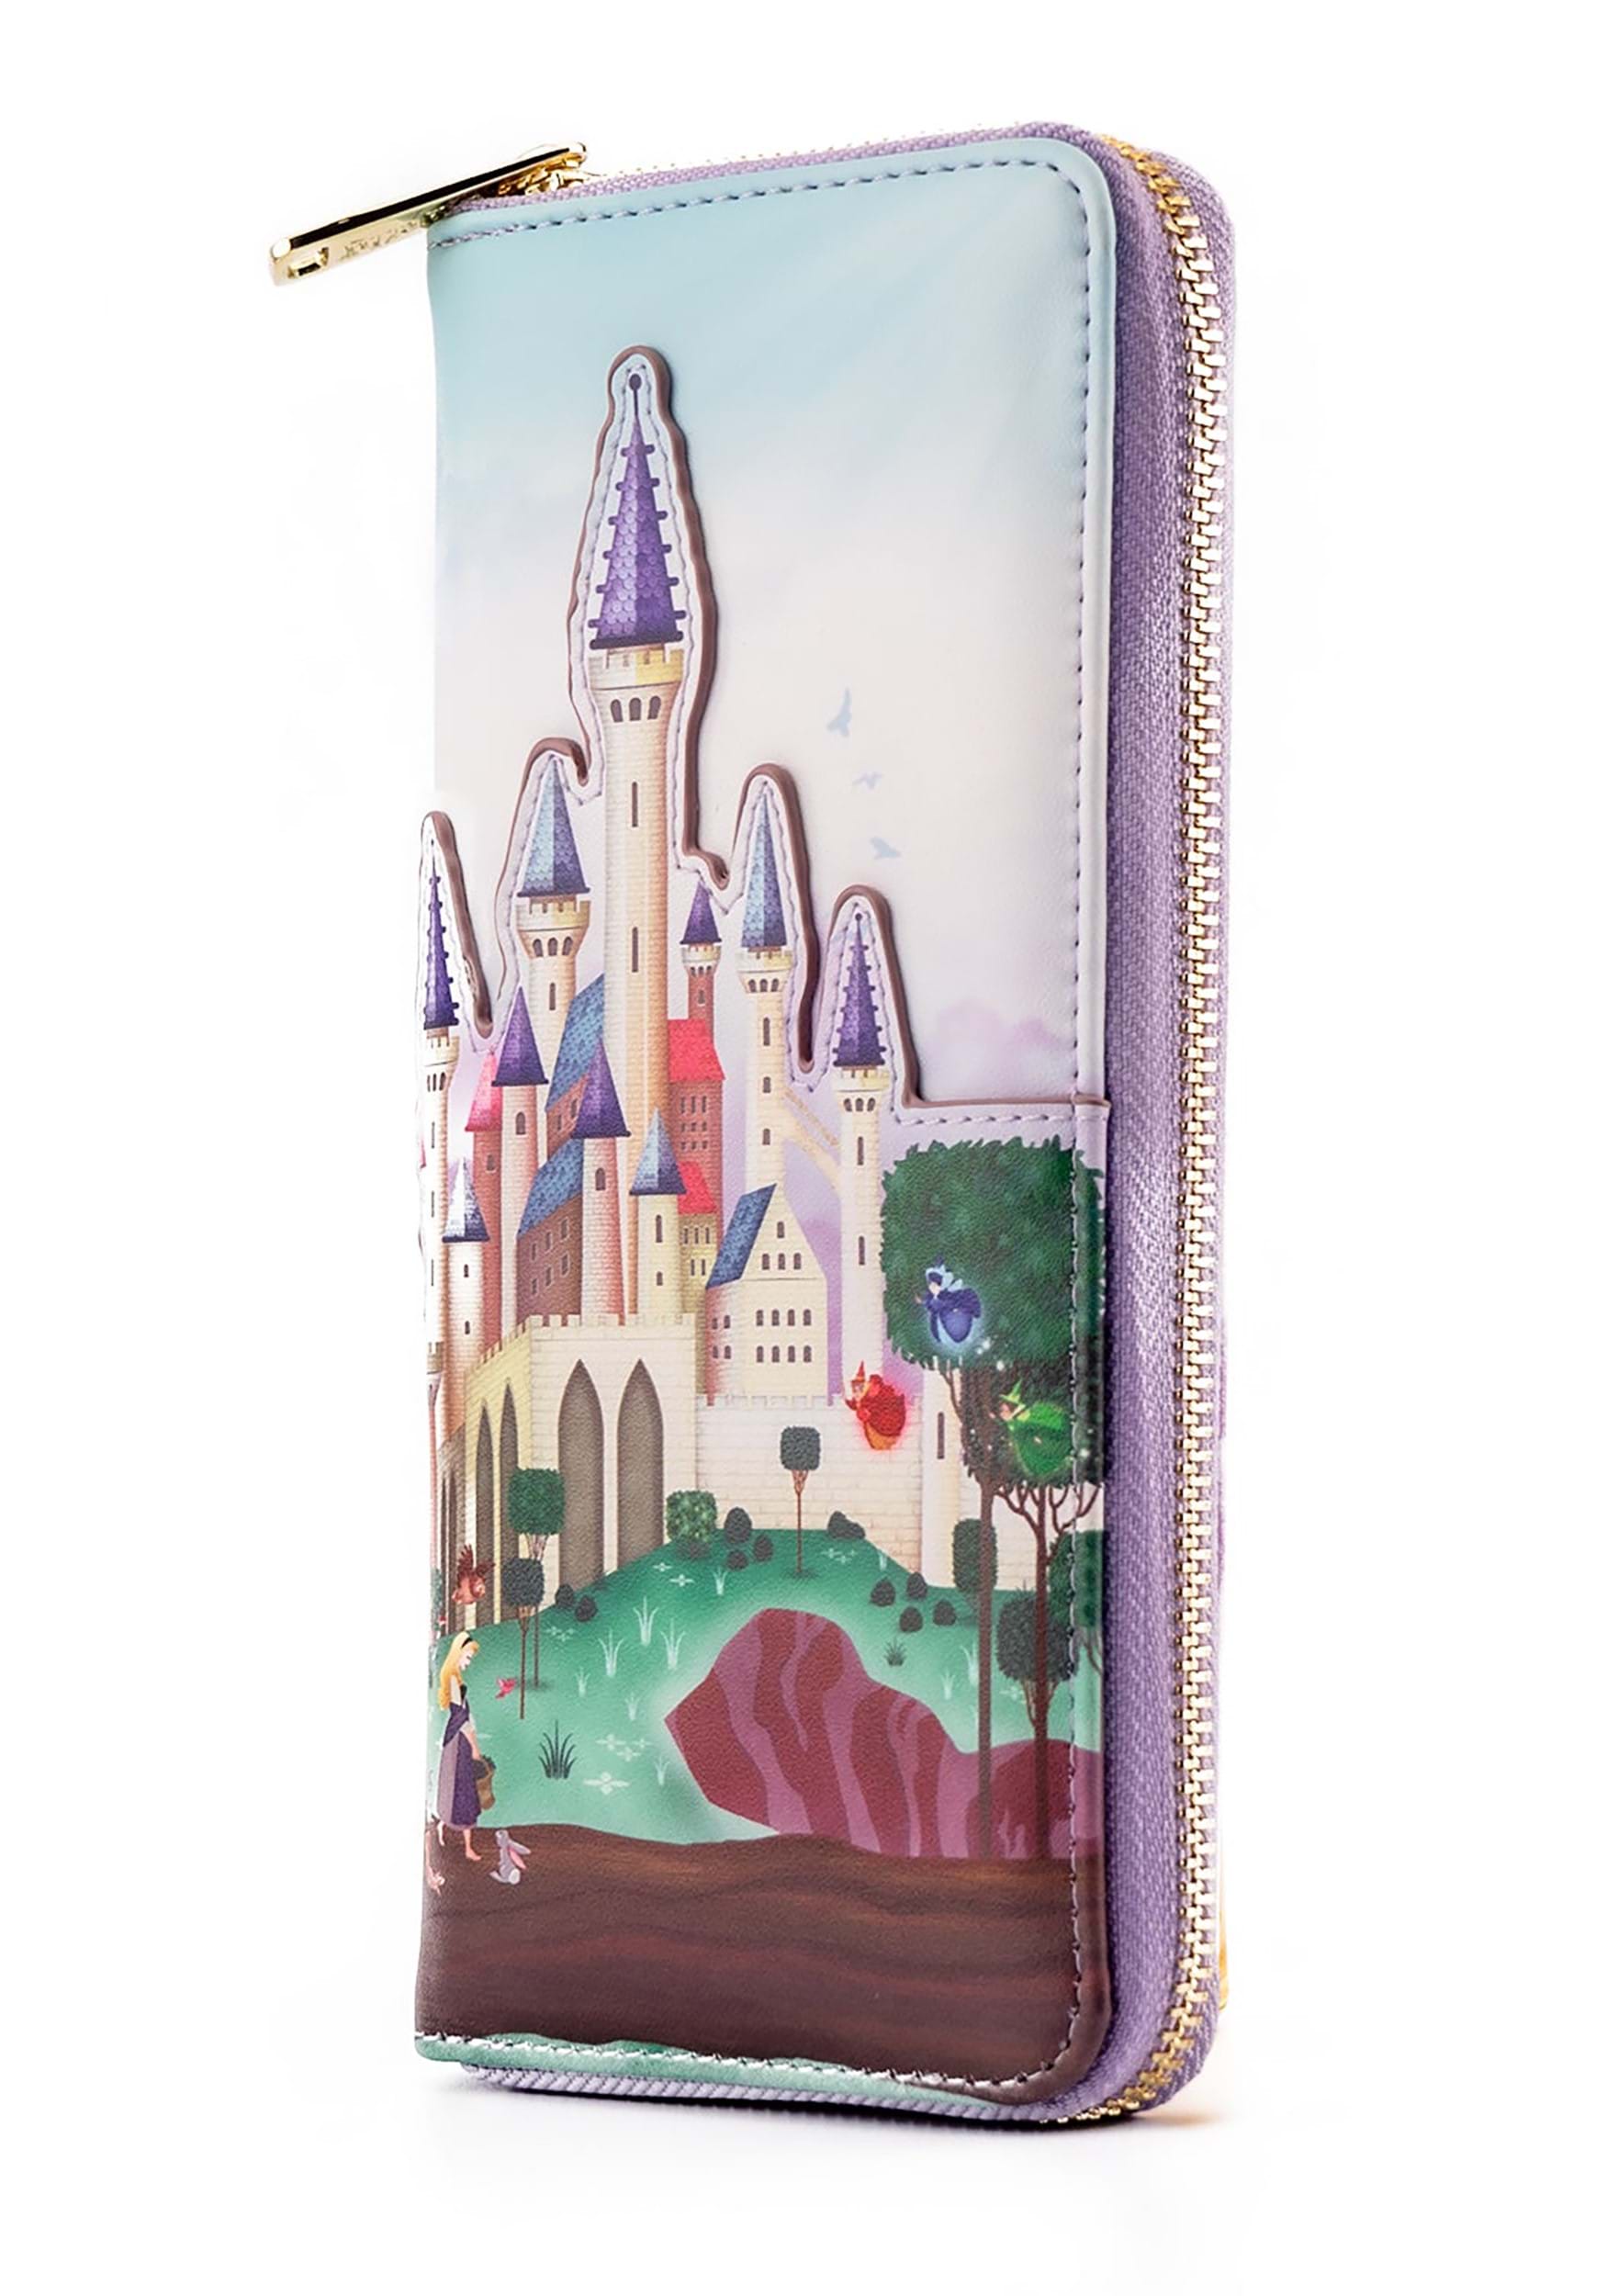 Loungefly Disney Princess Castle Sleeping Beauty Wallet